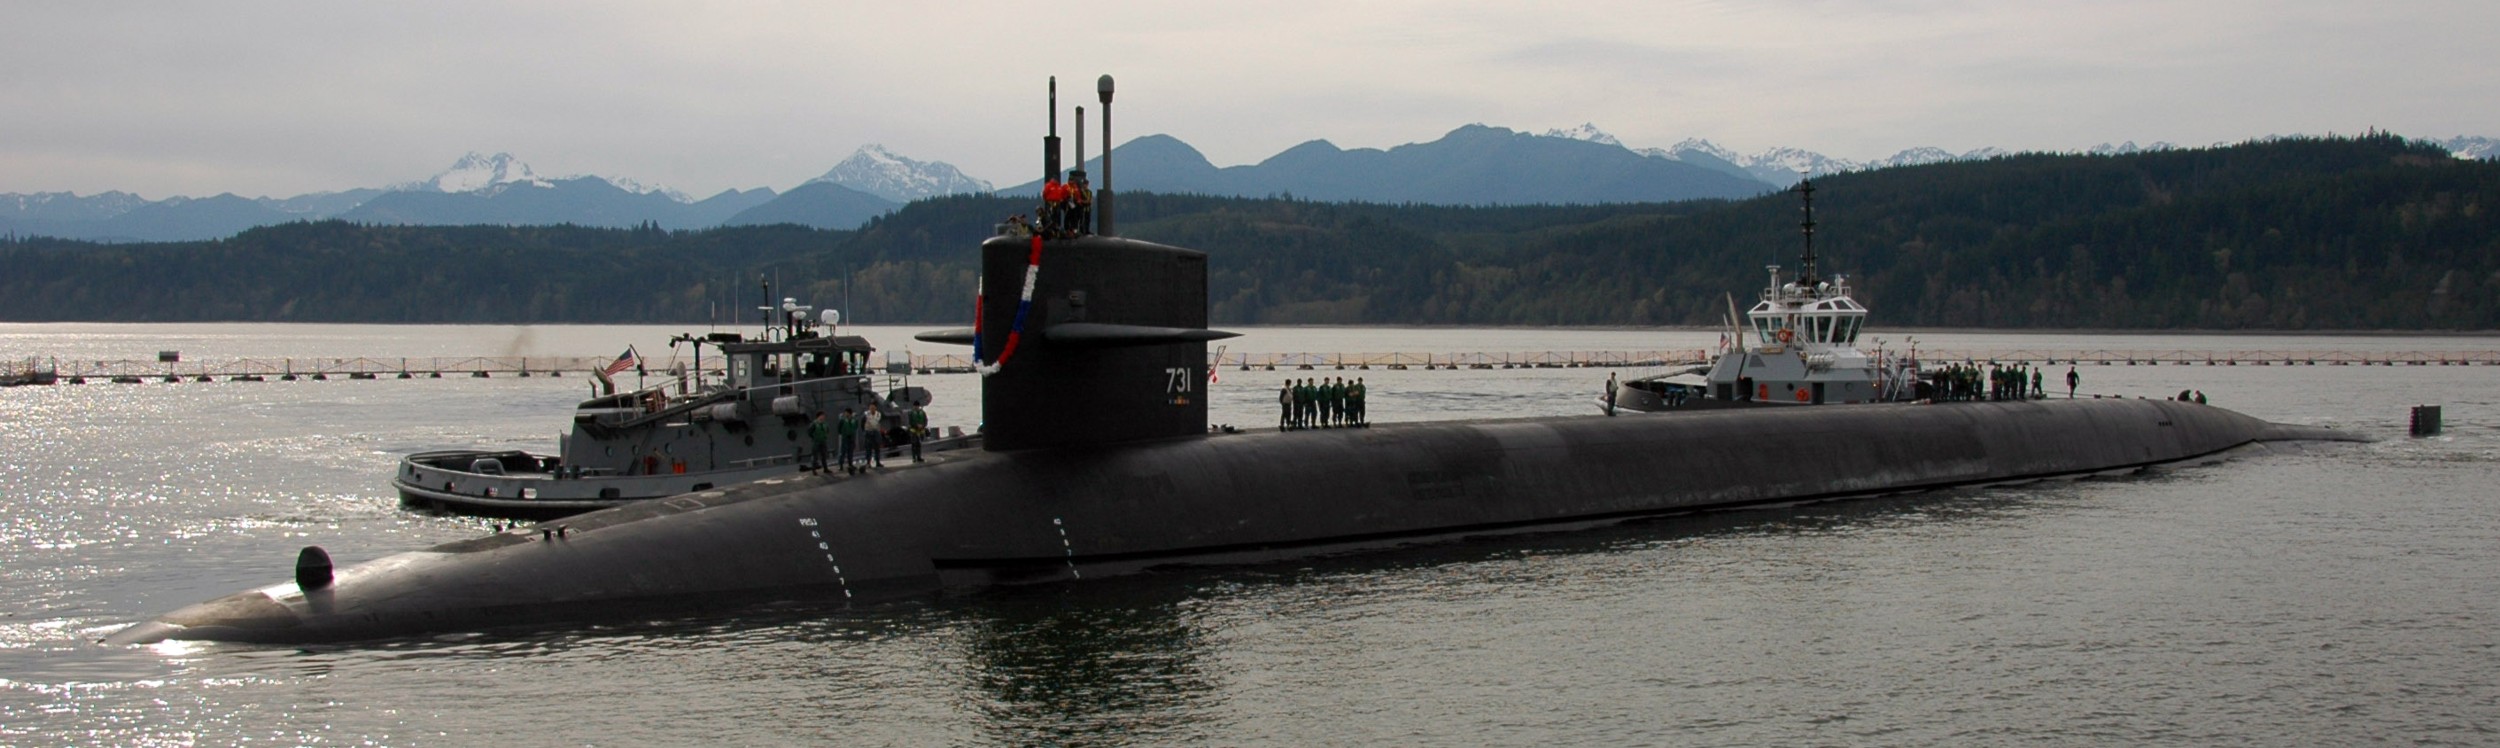 ssbn-731 uss alabama ohio class ballistic missile submarine 2013 15 naval base kitsap bangor bremerton